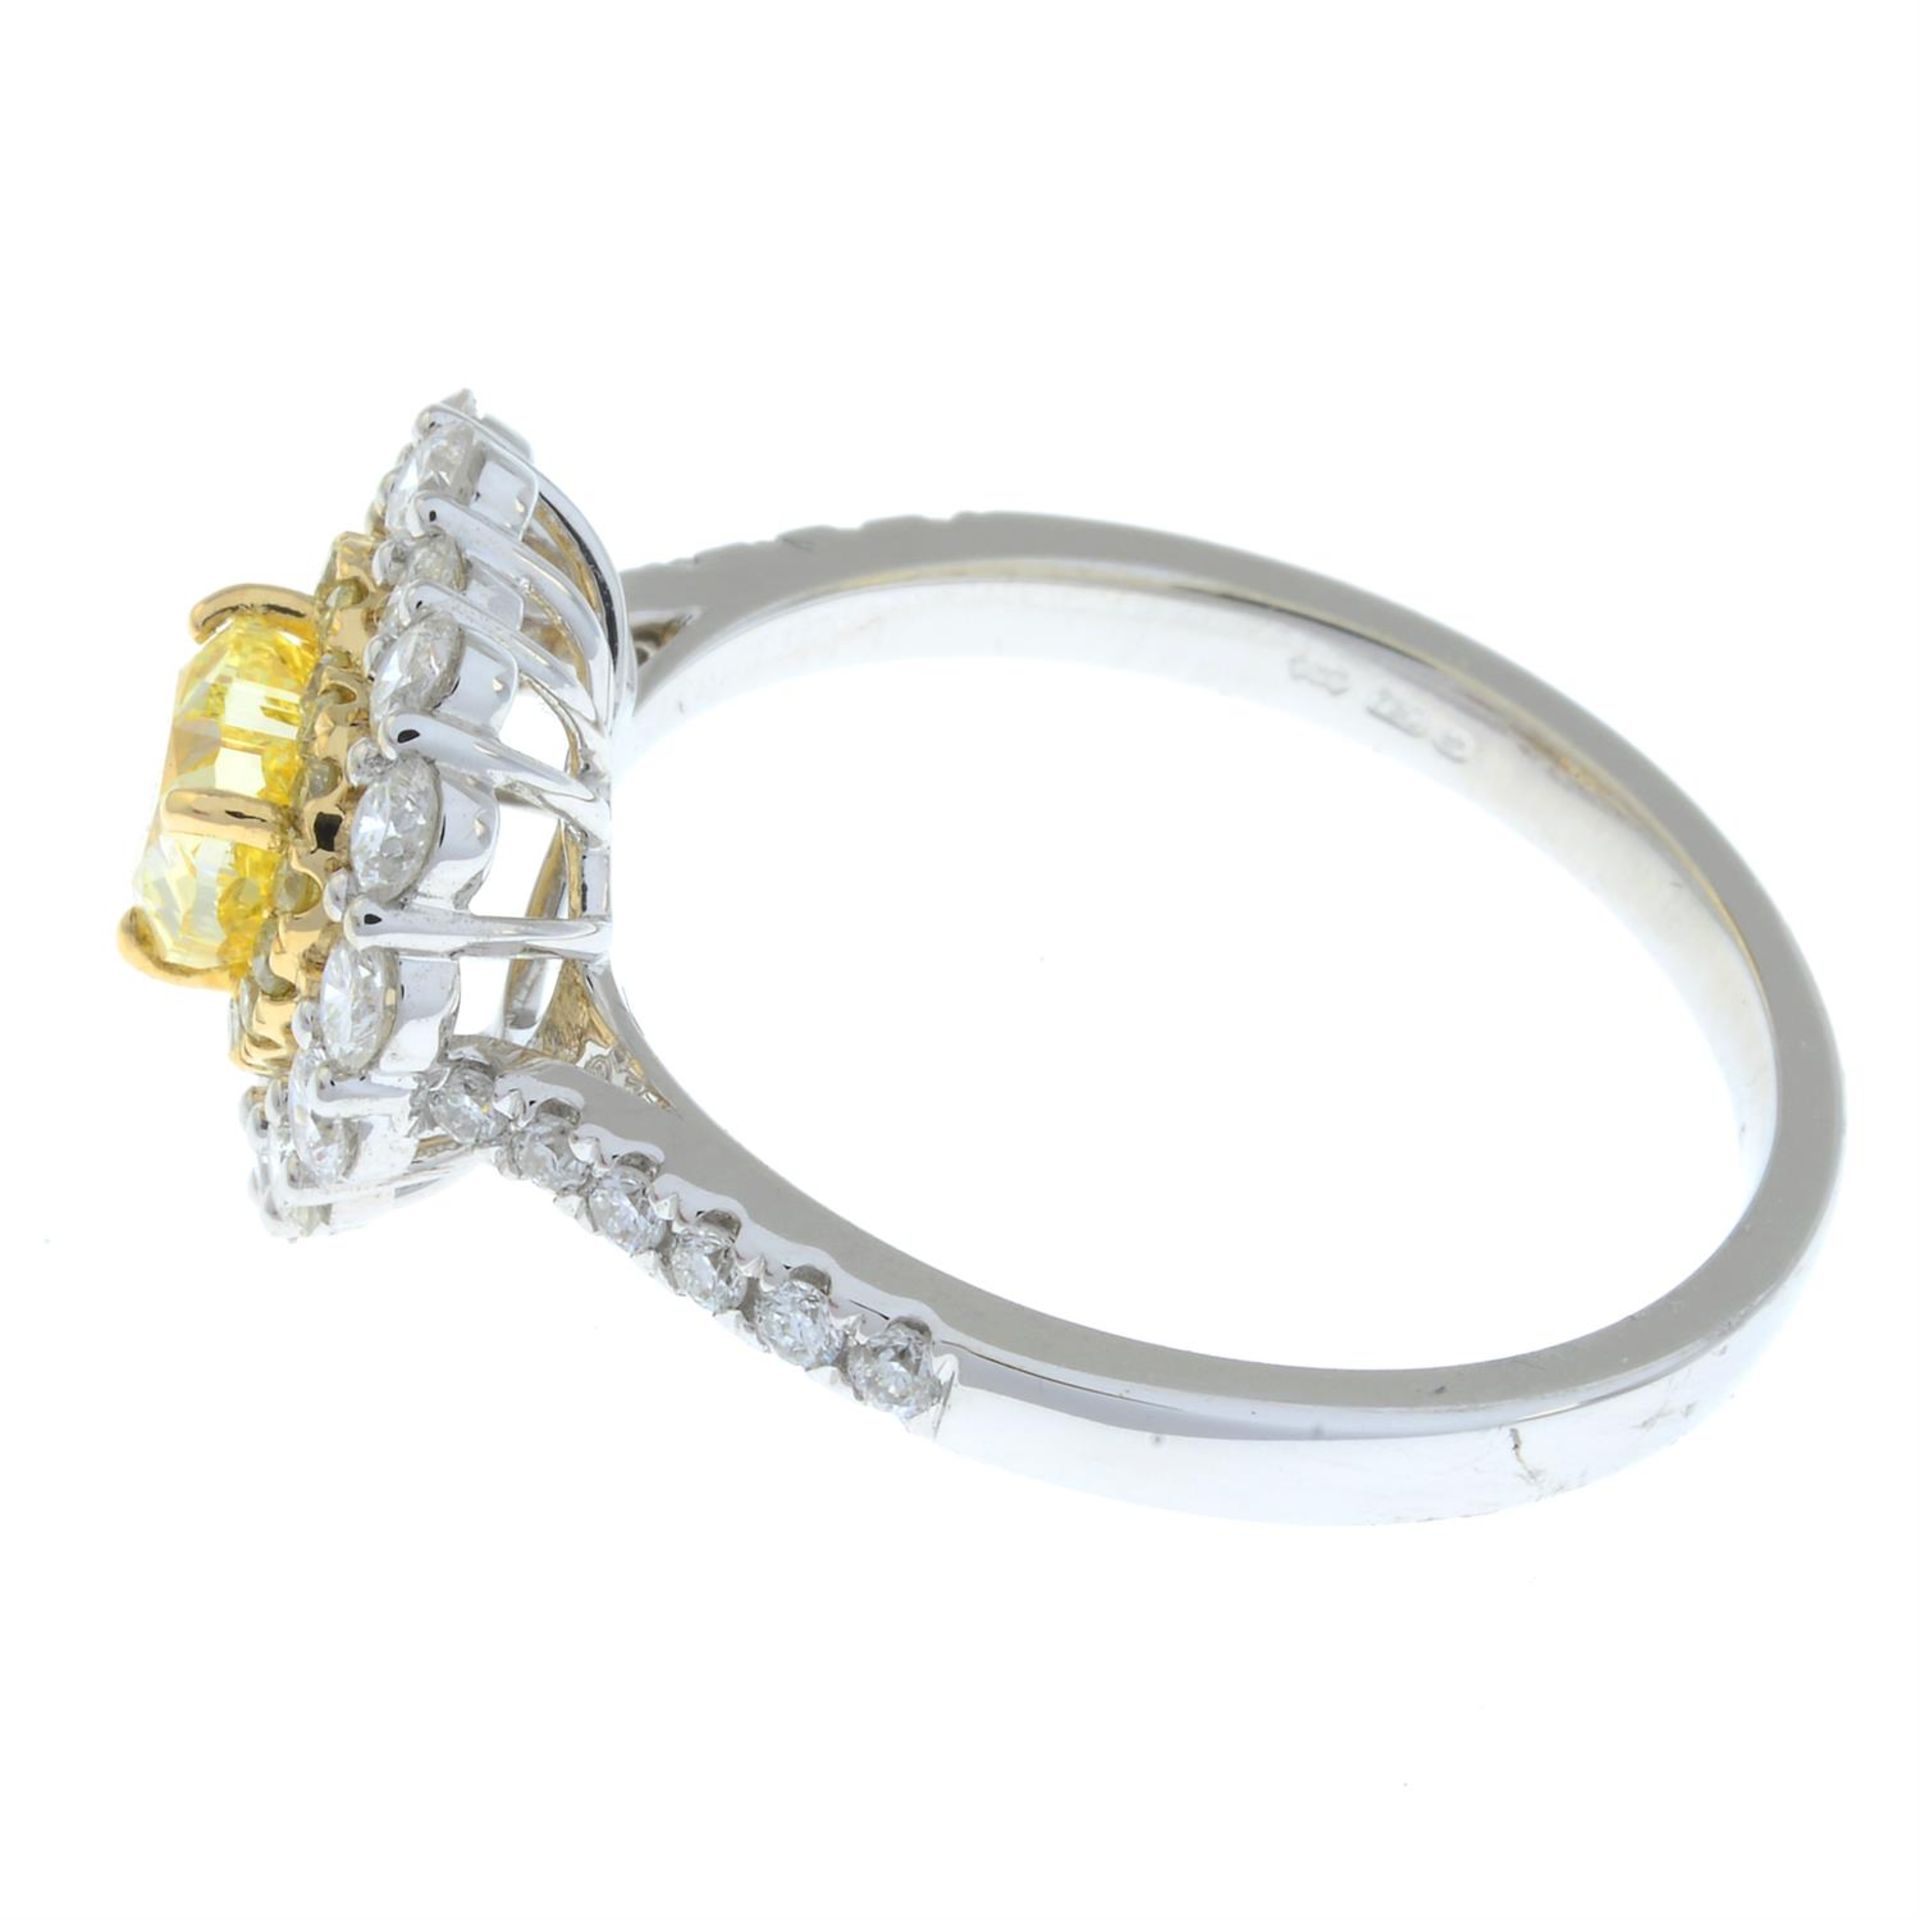 An 18ct gold Fancy Intense Yellow heart-shape diamond, 'yellow' diamond and diamond cluster ring. - Image 4 of 6